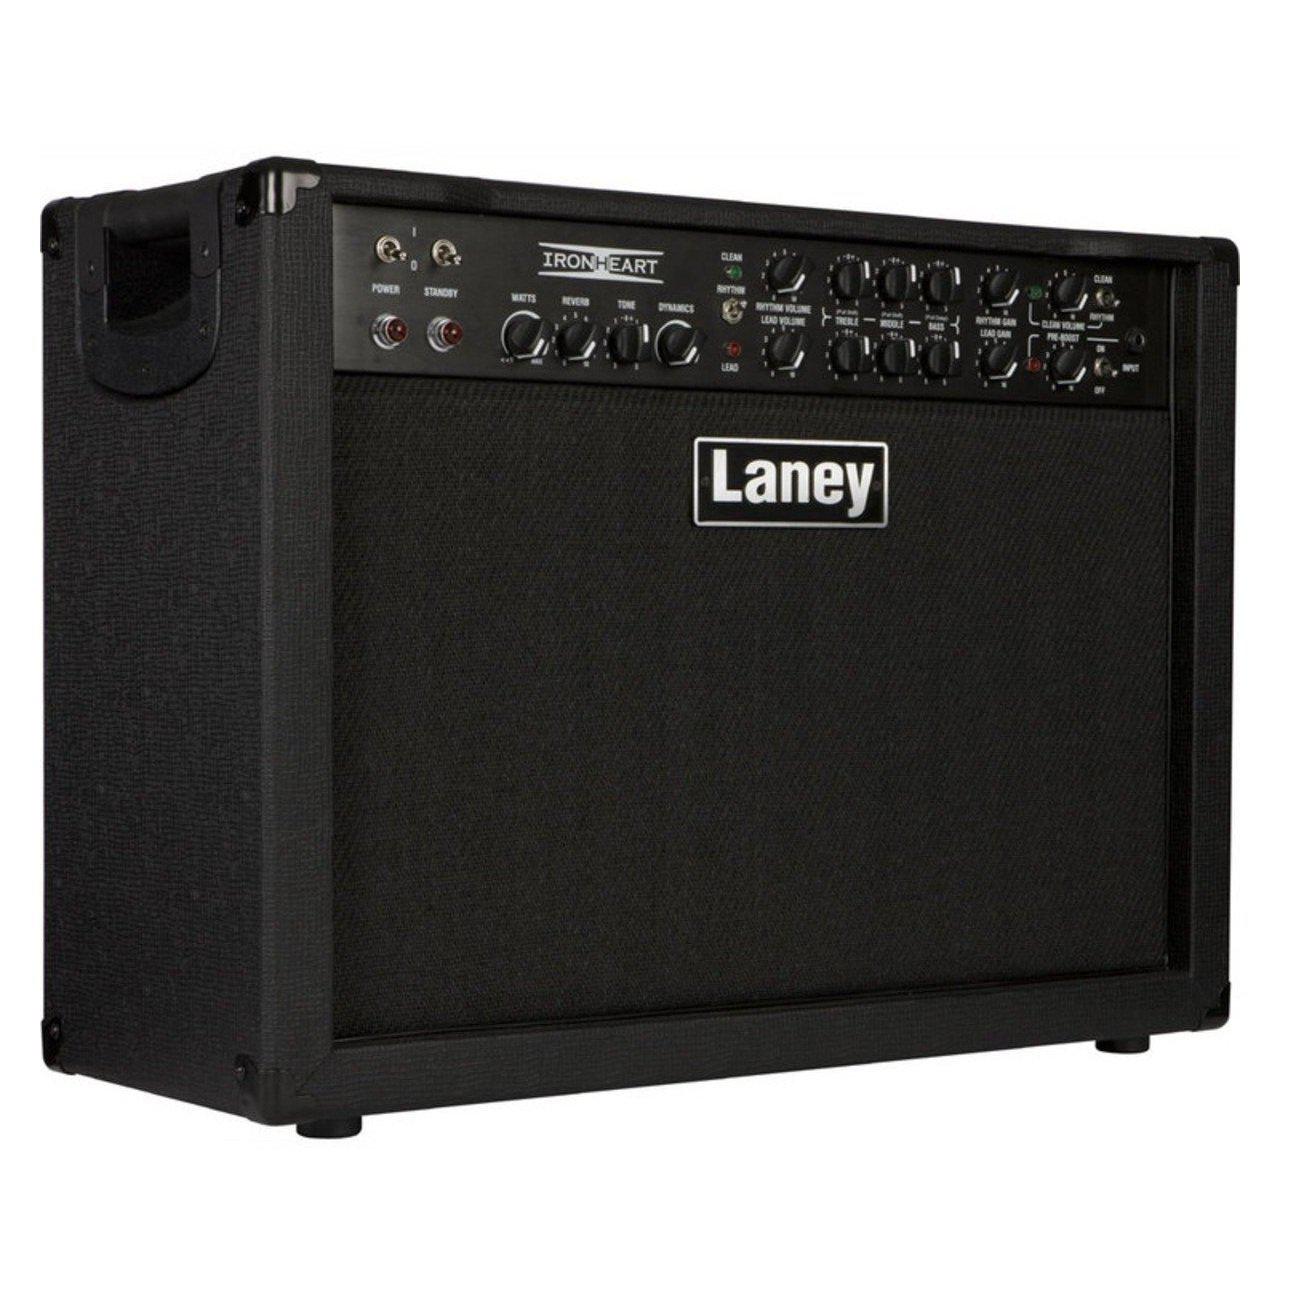 Laney - Combo Iron Heart para Guitarra Eléctrica, 60W 2x12 Mod.IRT60-212_70